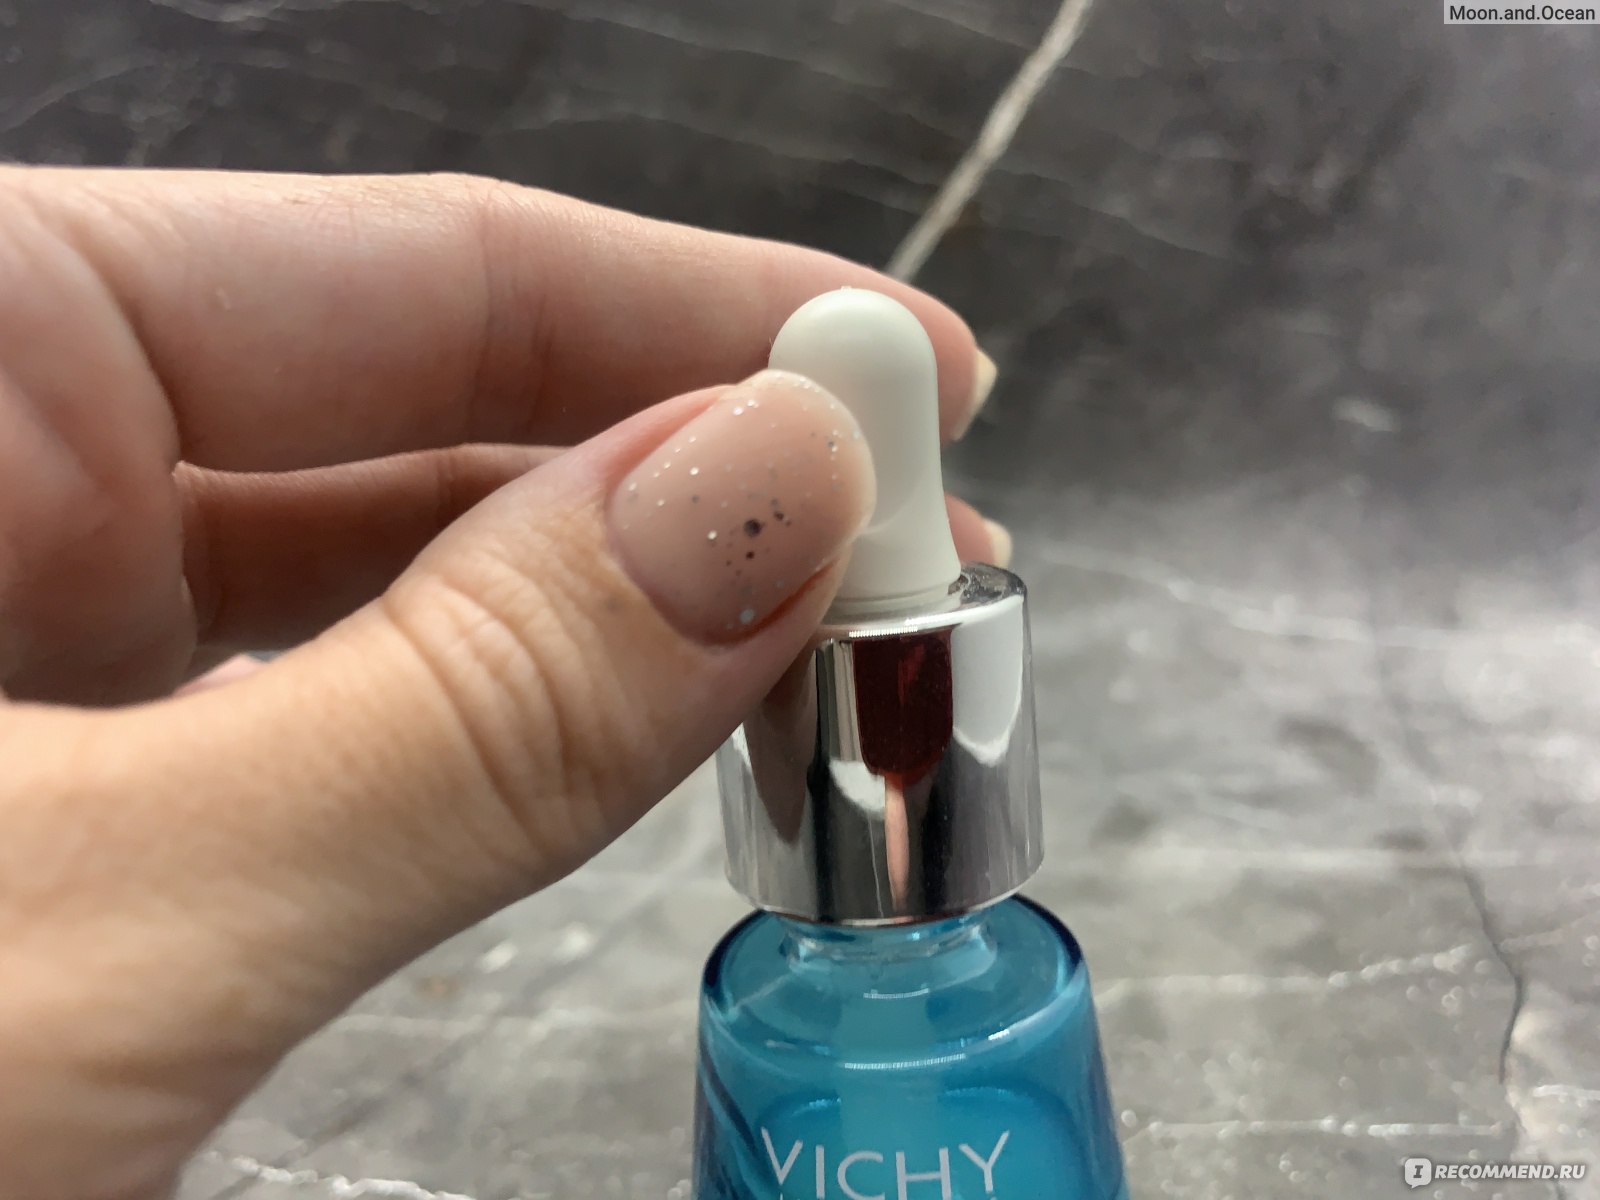 Сыворотка для лица Vichy Mineral 89 Probiotic Fractions фото